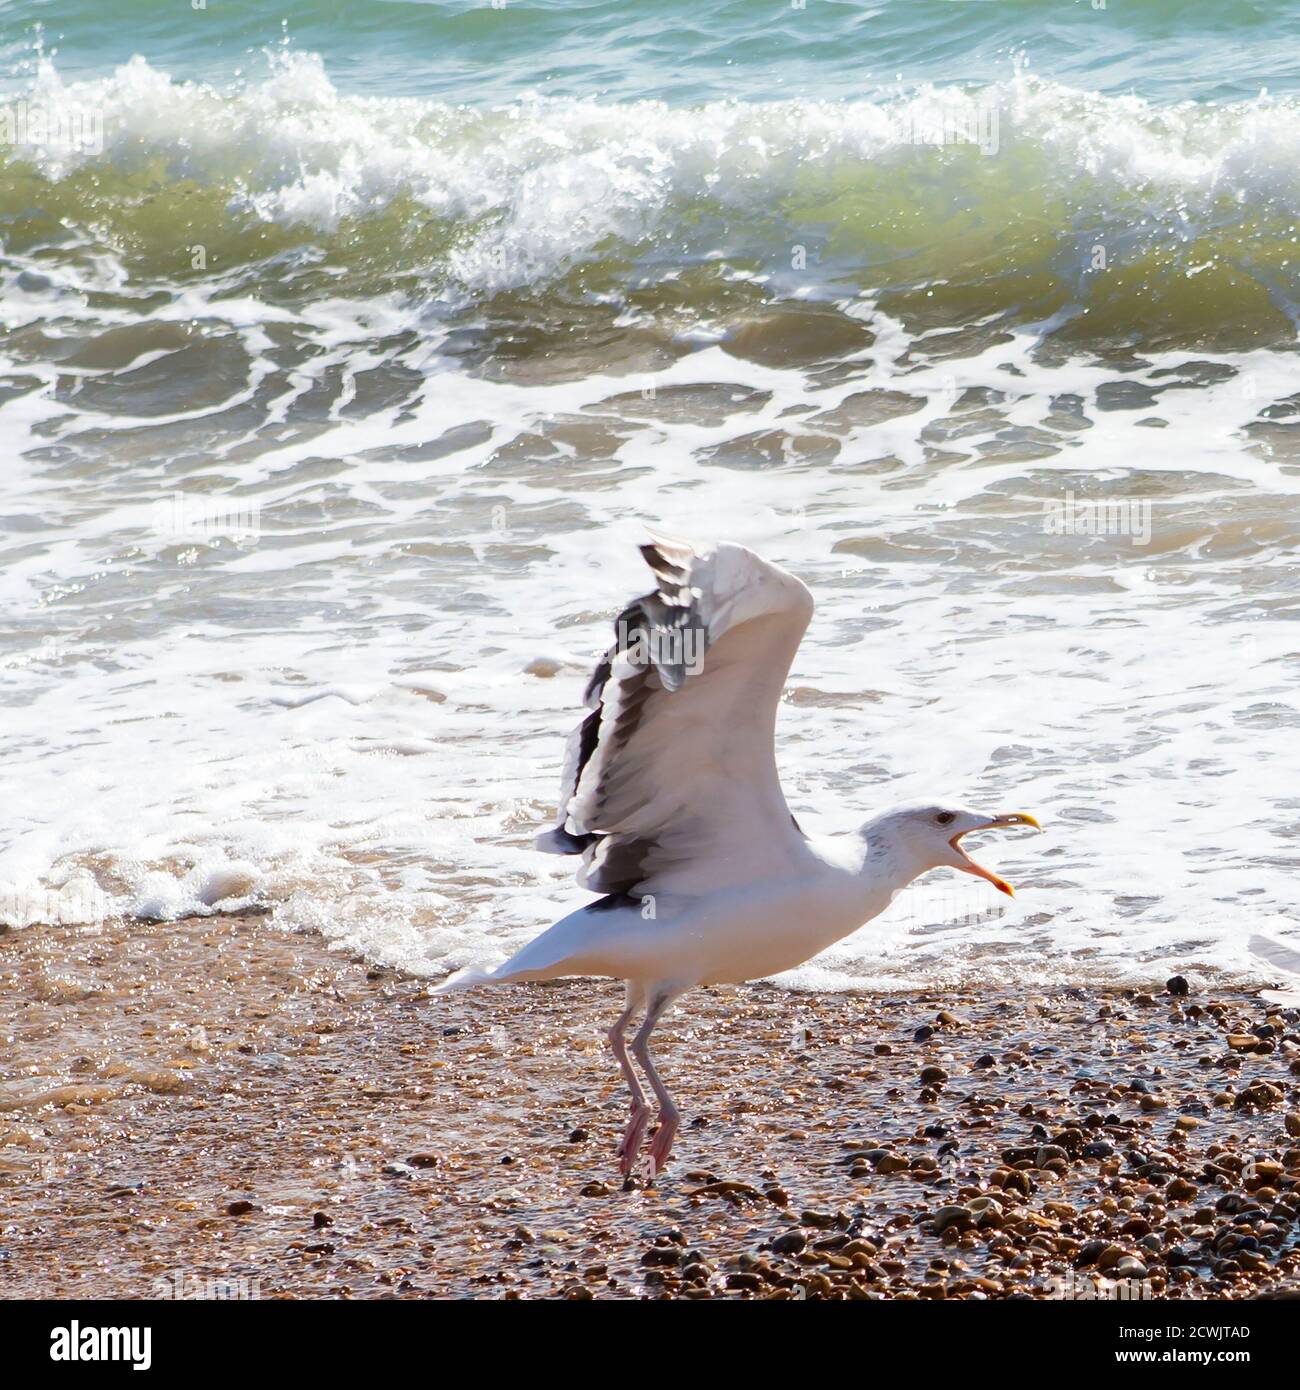 Seagull squawking Stock Photo